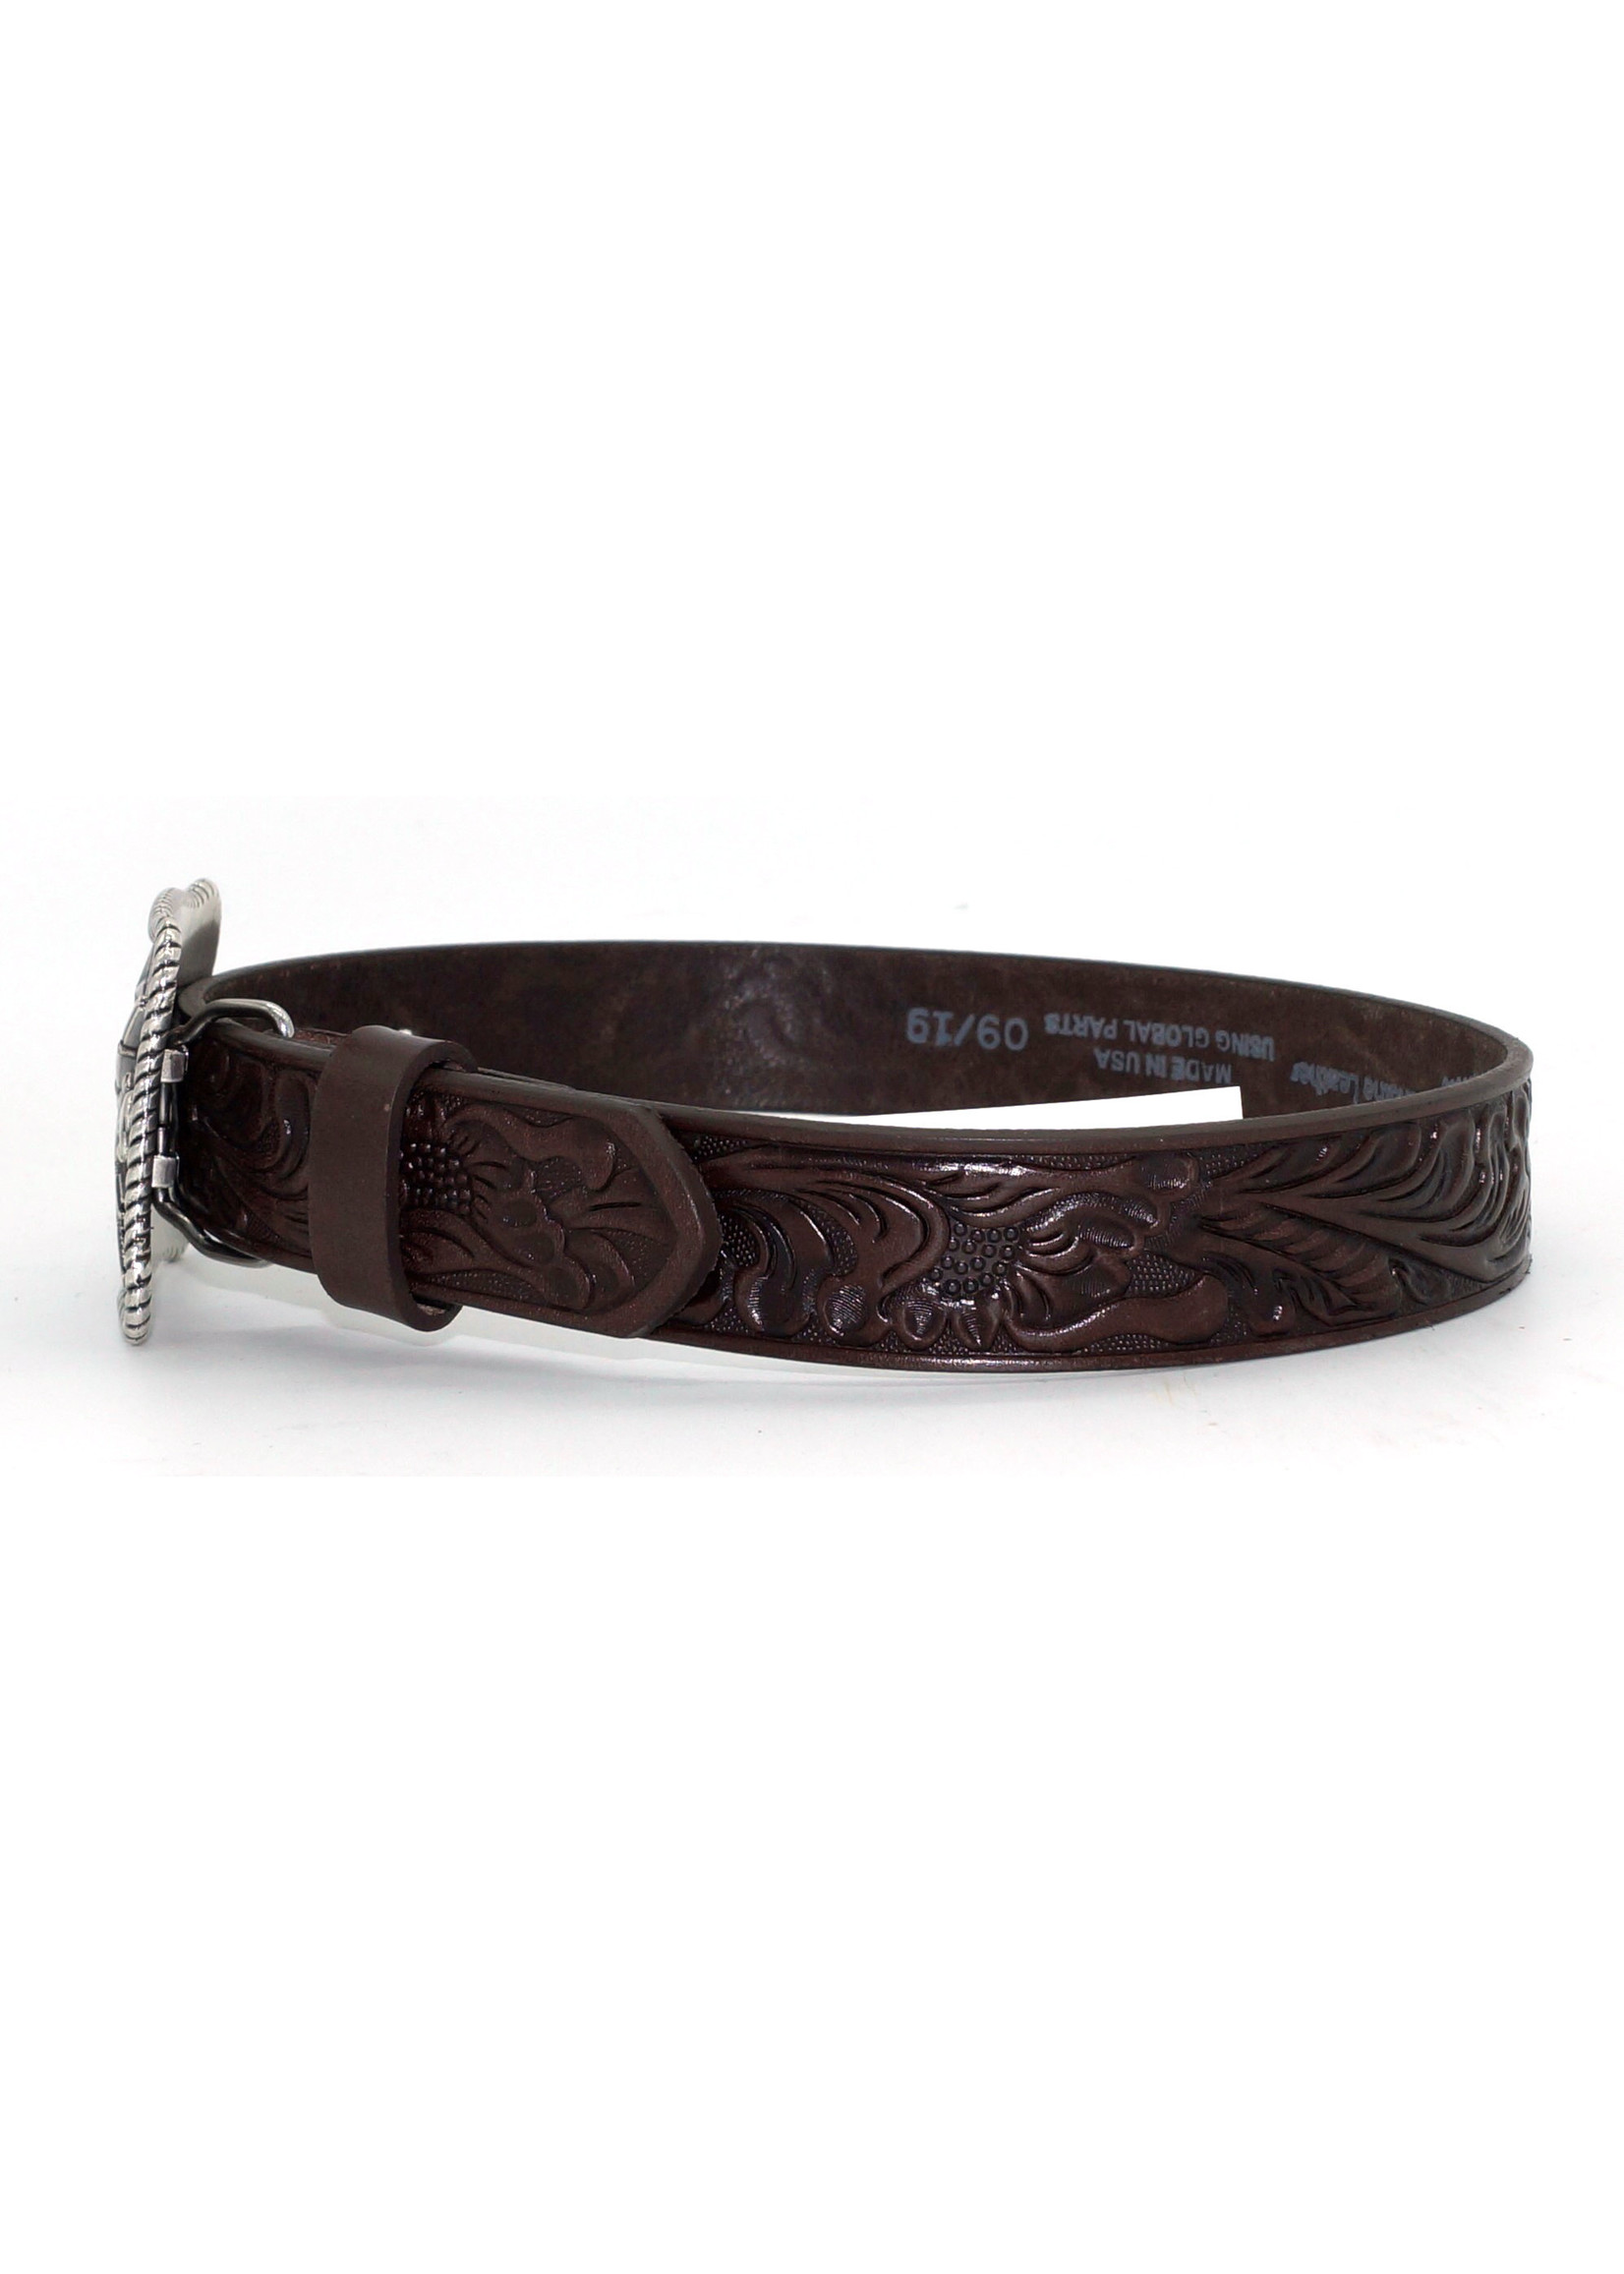 Tony Lama Children's Cowboy & Indian Leather Belt C60238